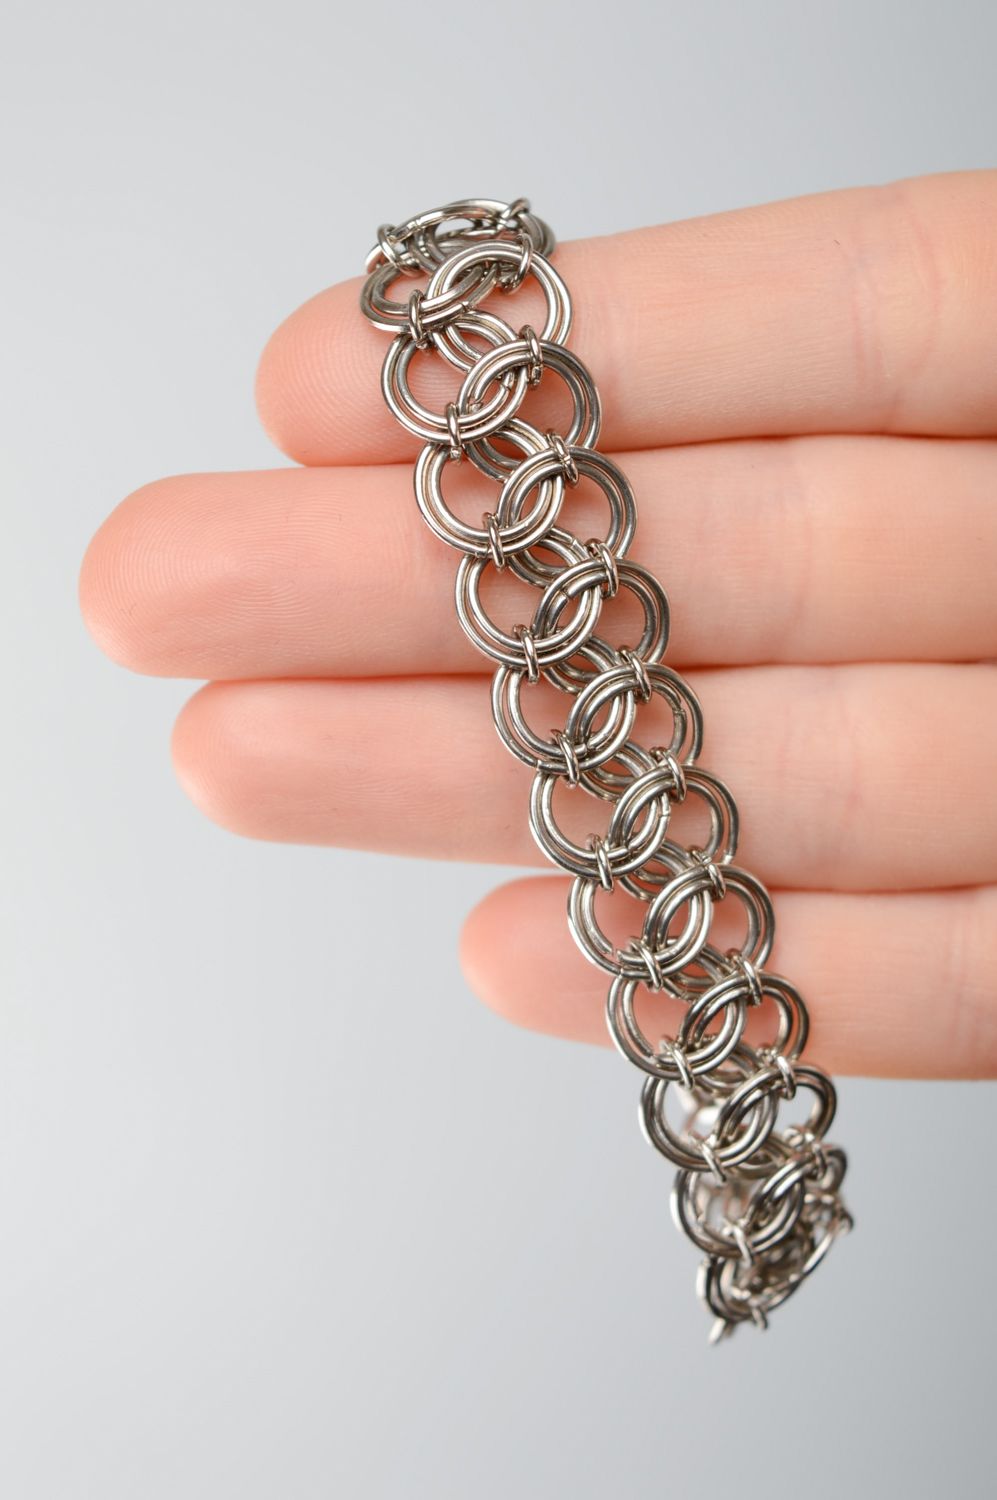 Women's jewelry alloy chainmail bracelet photo 4